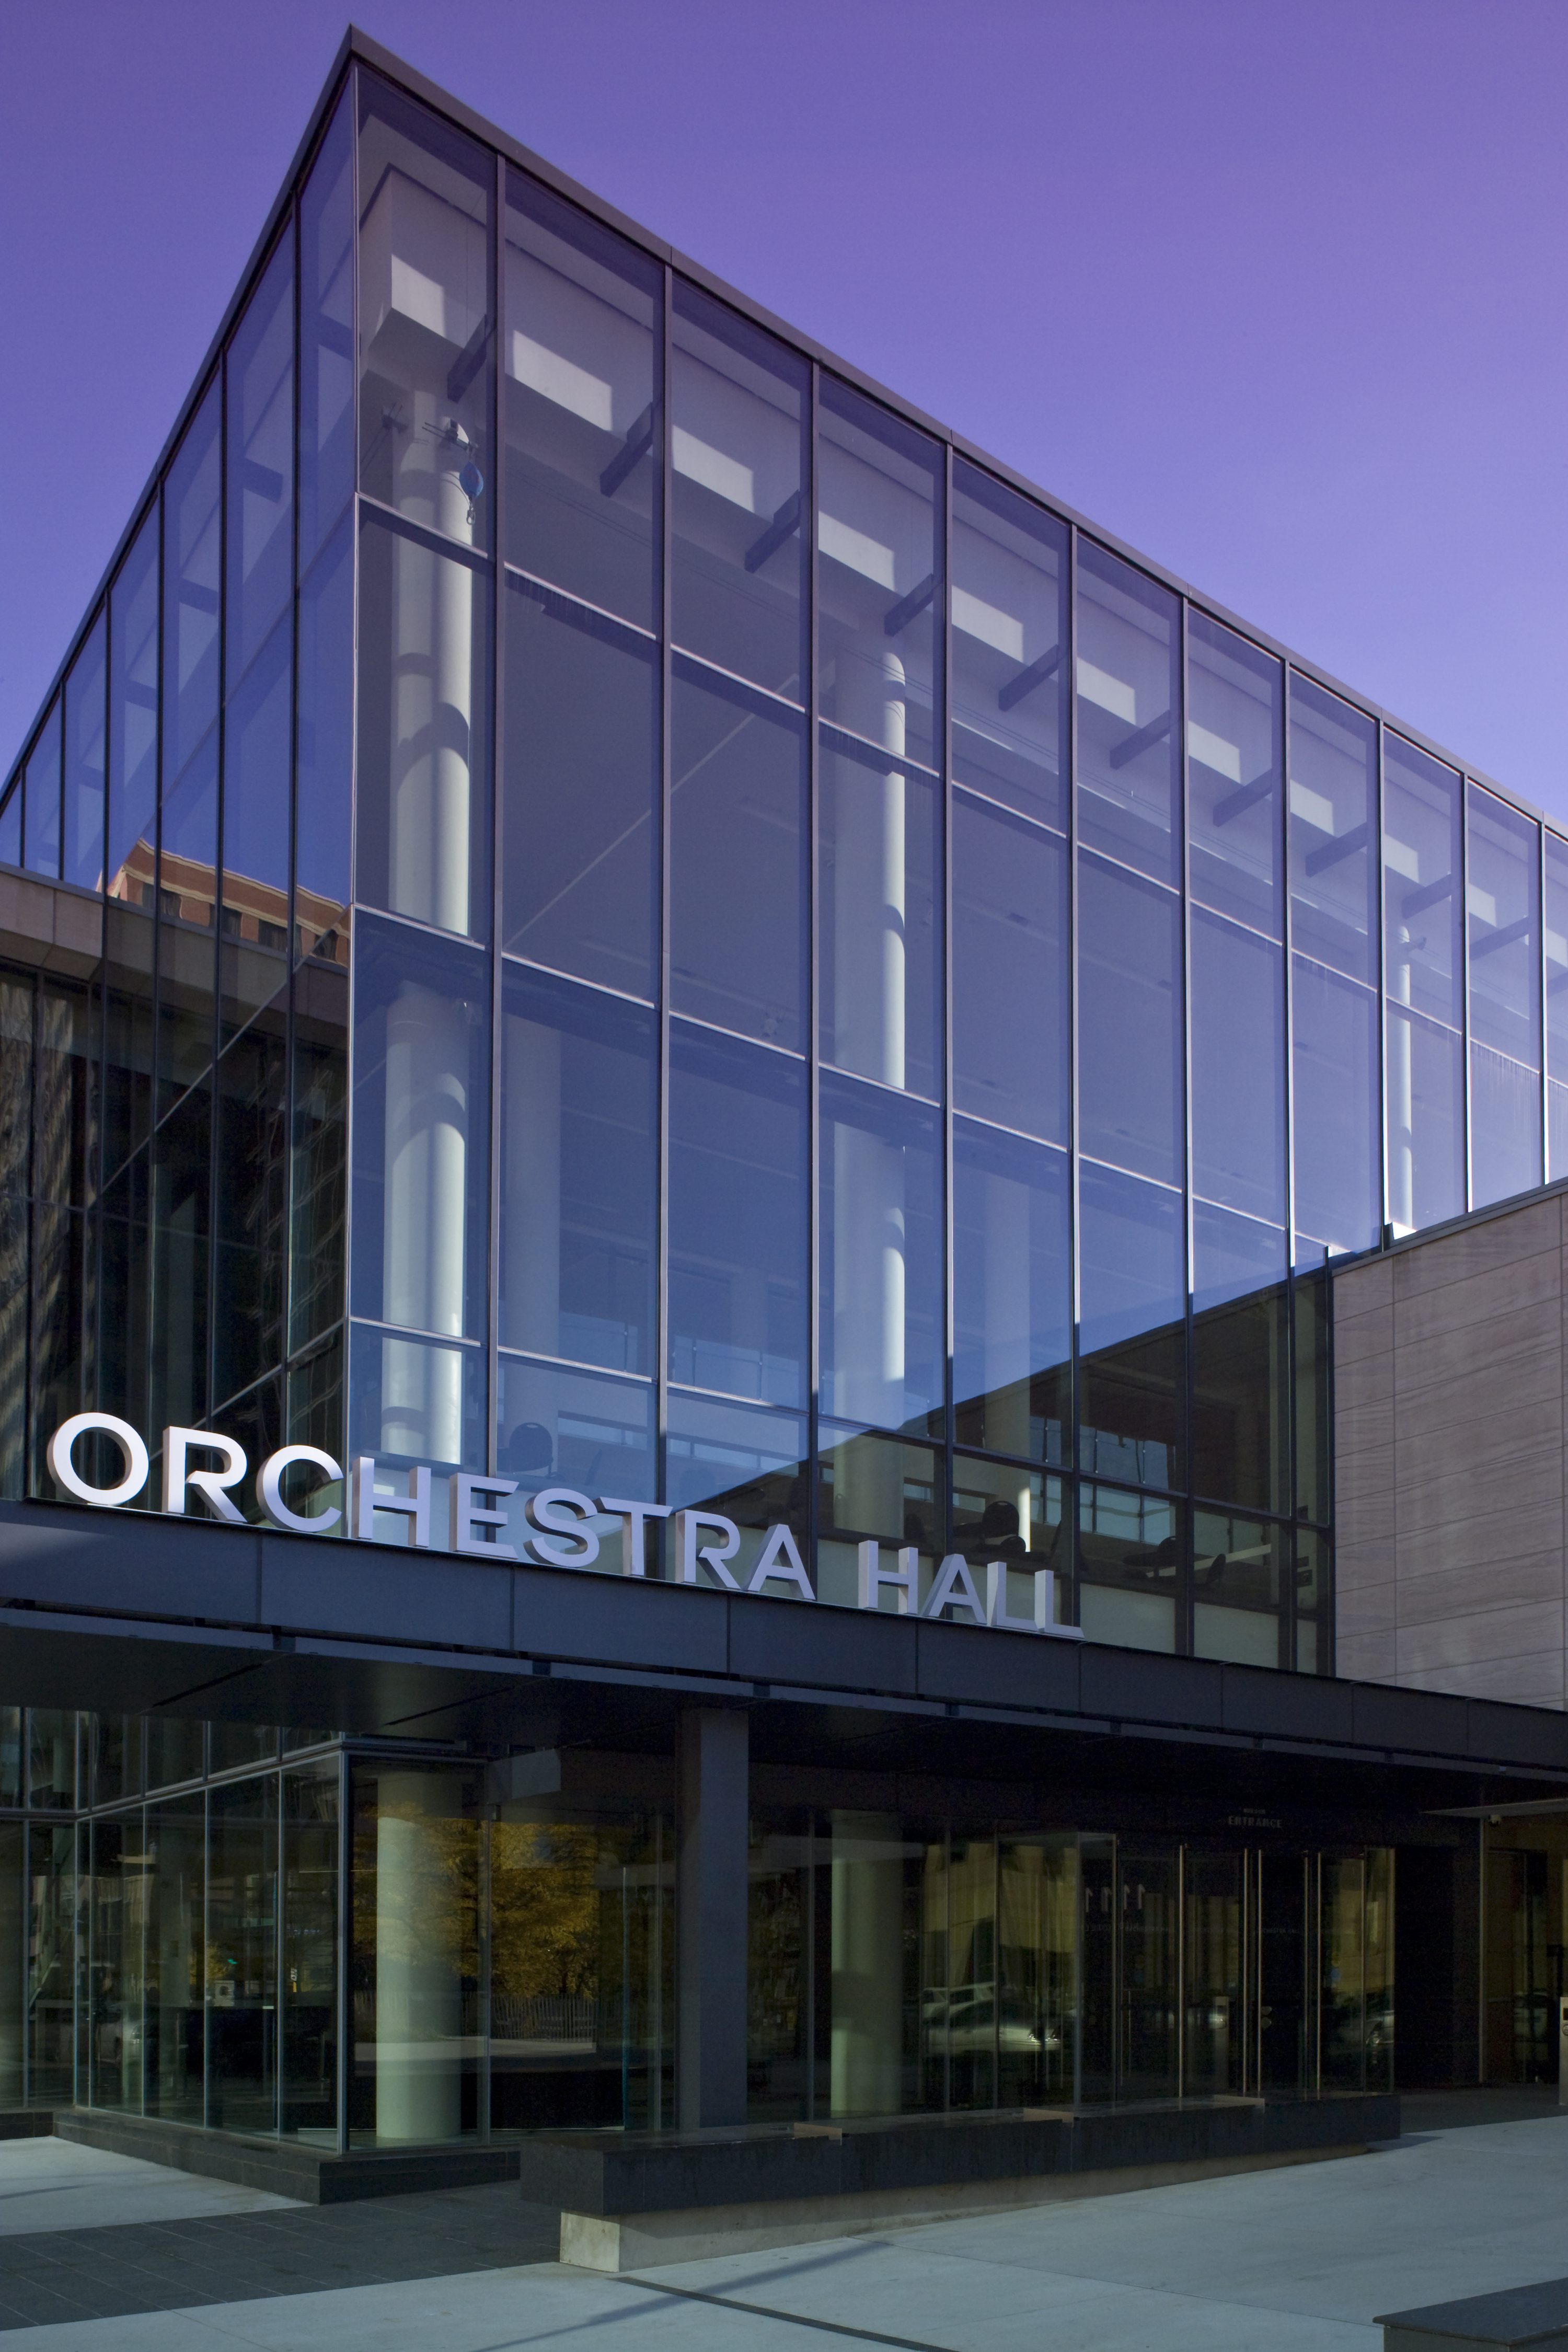 Minnesota Orchestra Hall Addition